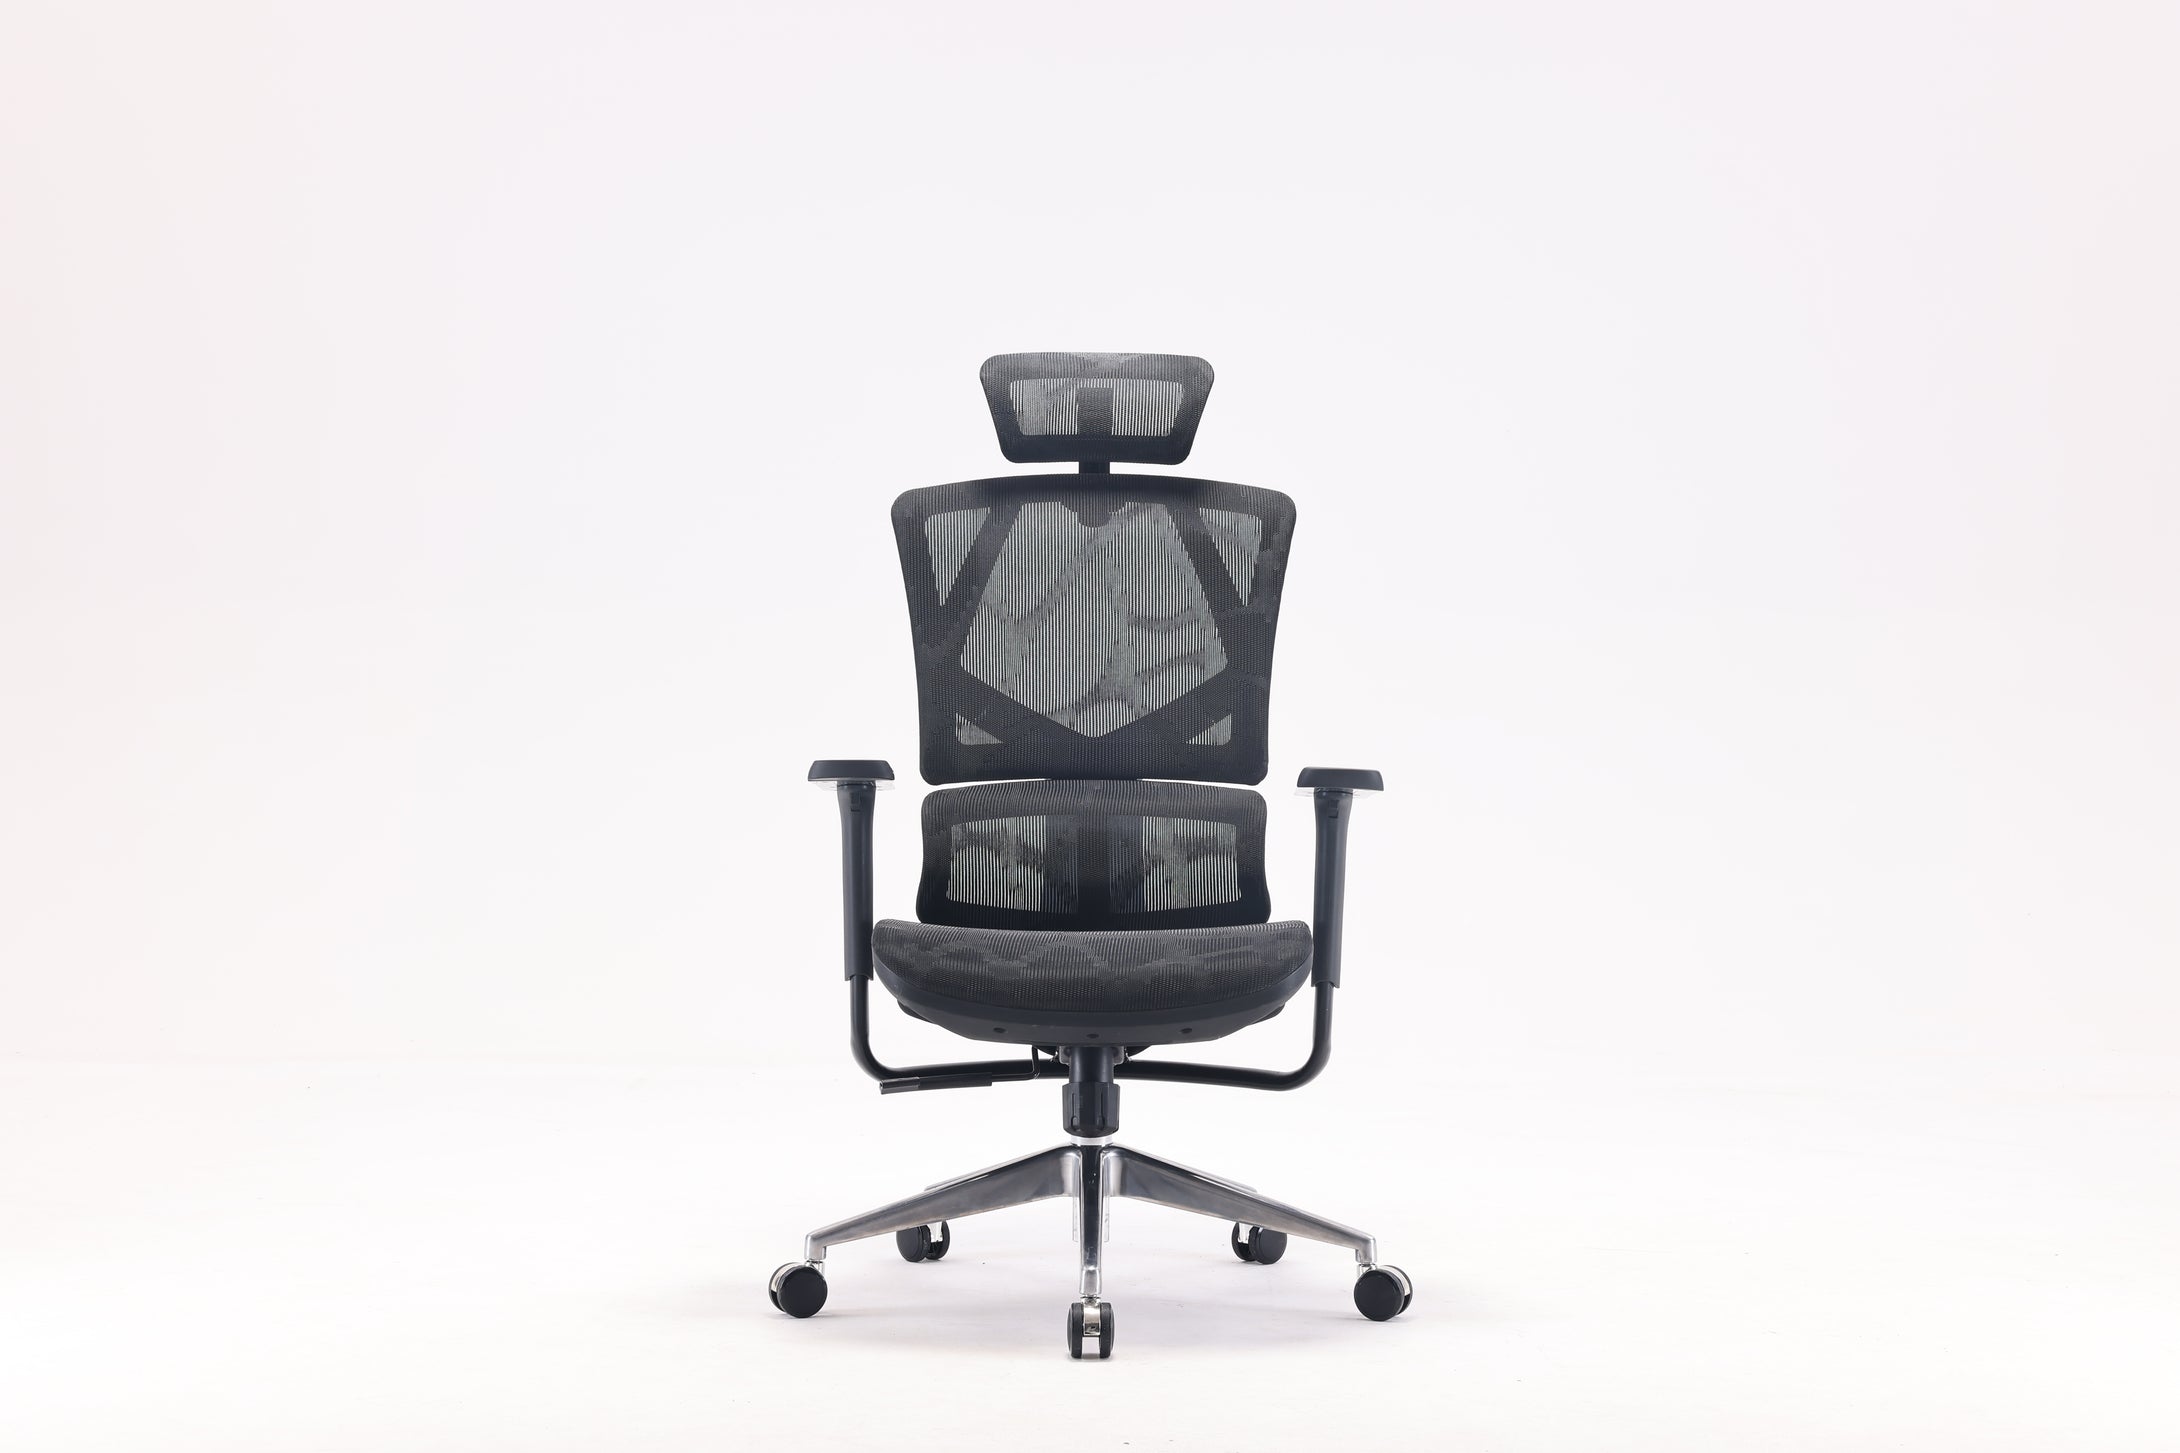 Sihoo VIto M90 Ergonomic Office Chair